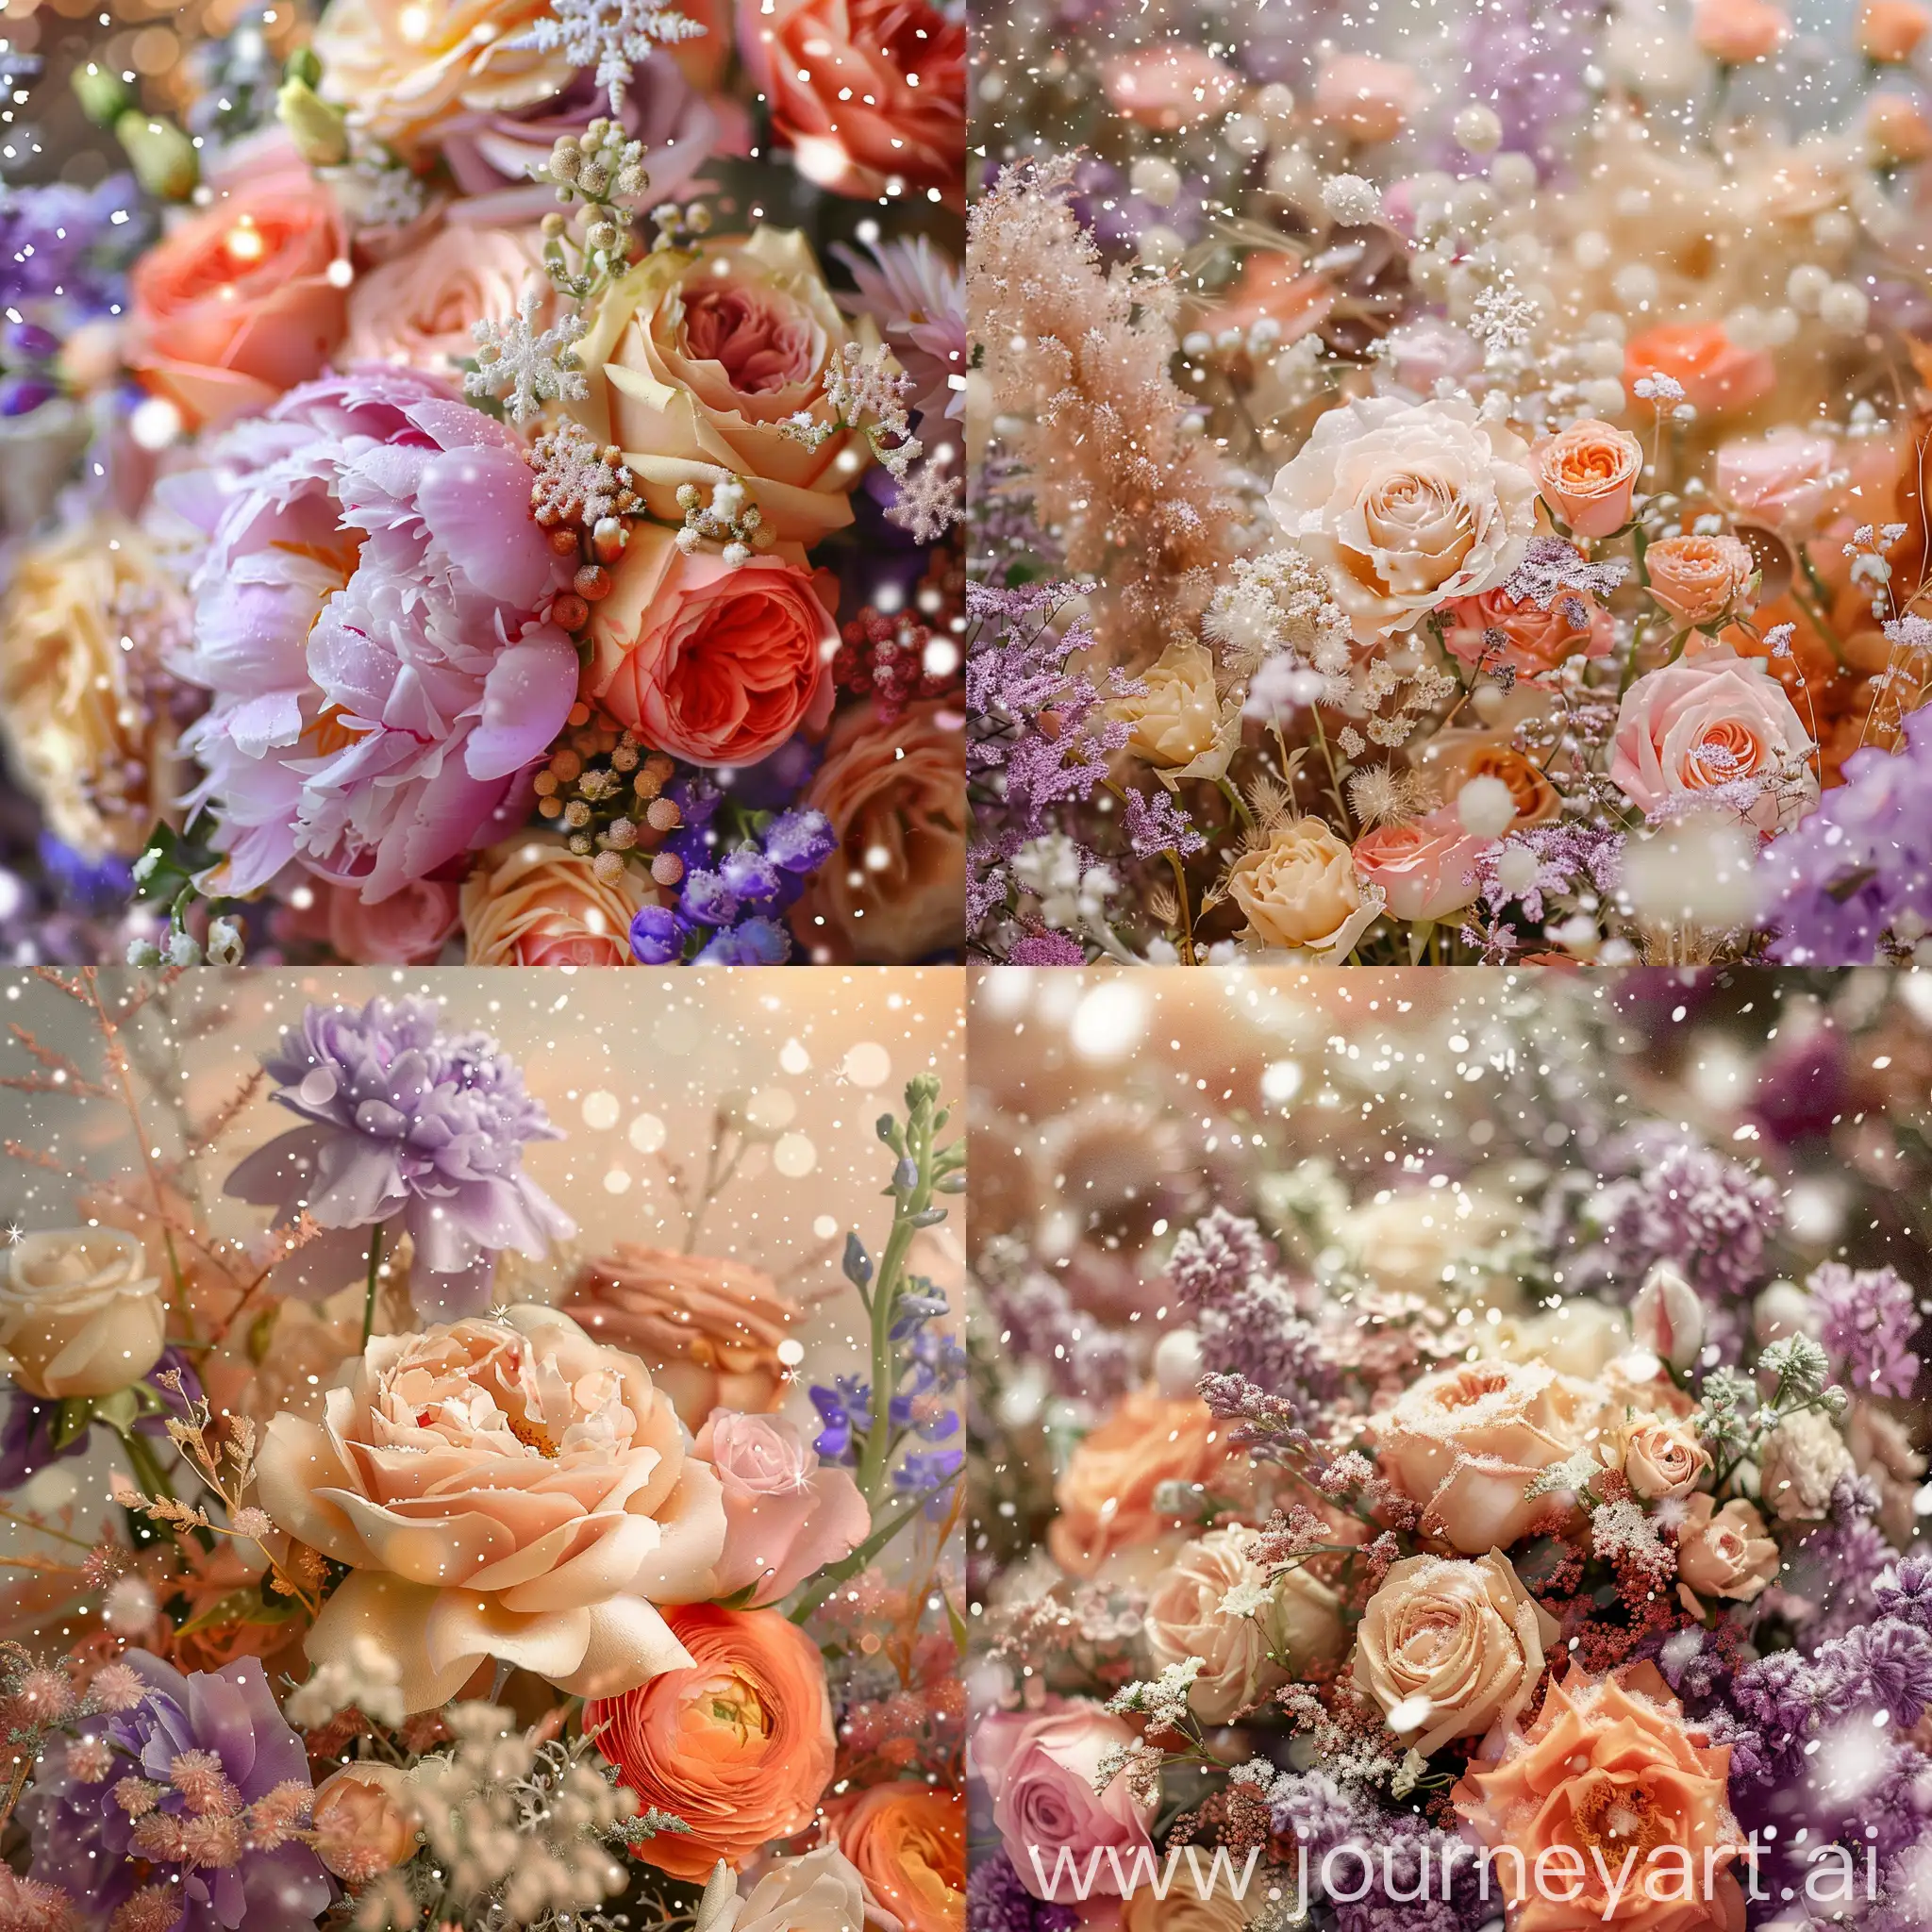 Enchanting-Snowfall-Amidst-Vibrant-Spring-Flowers